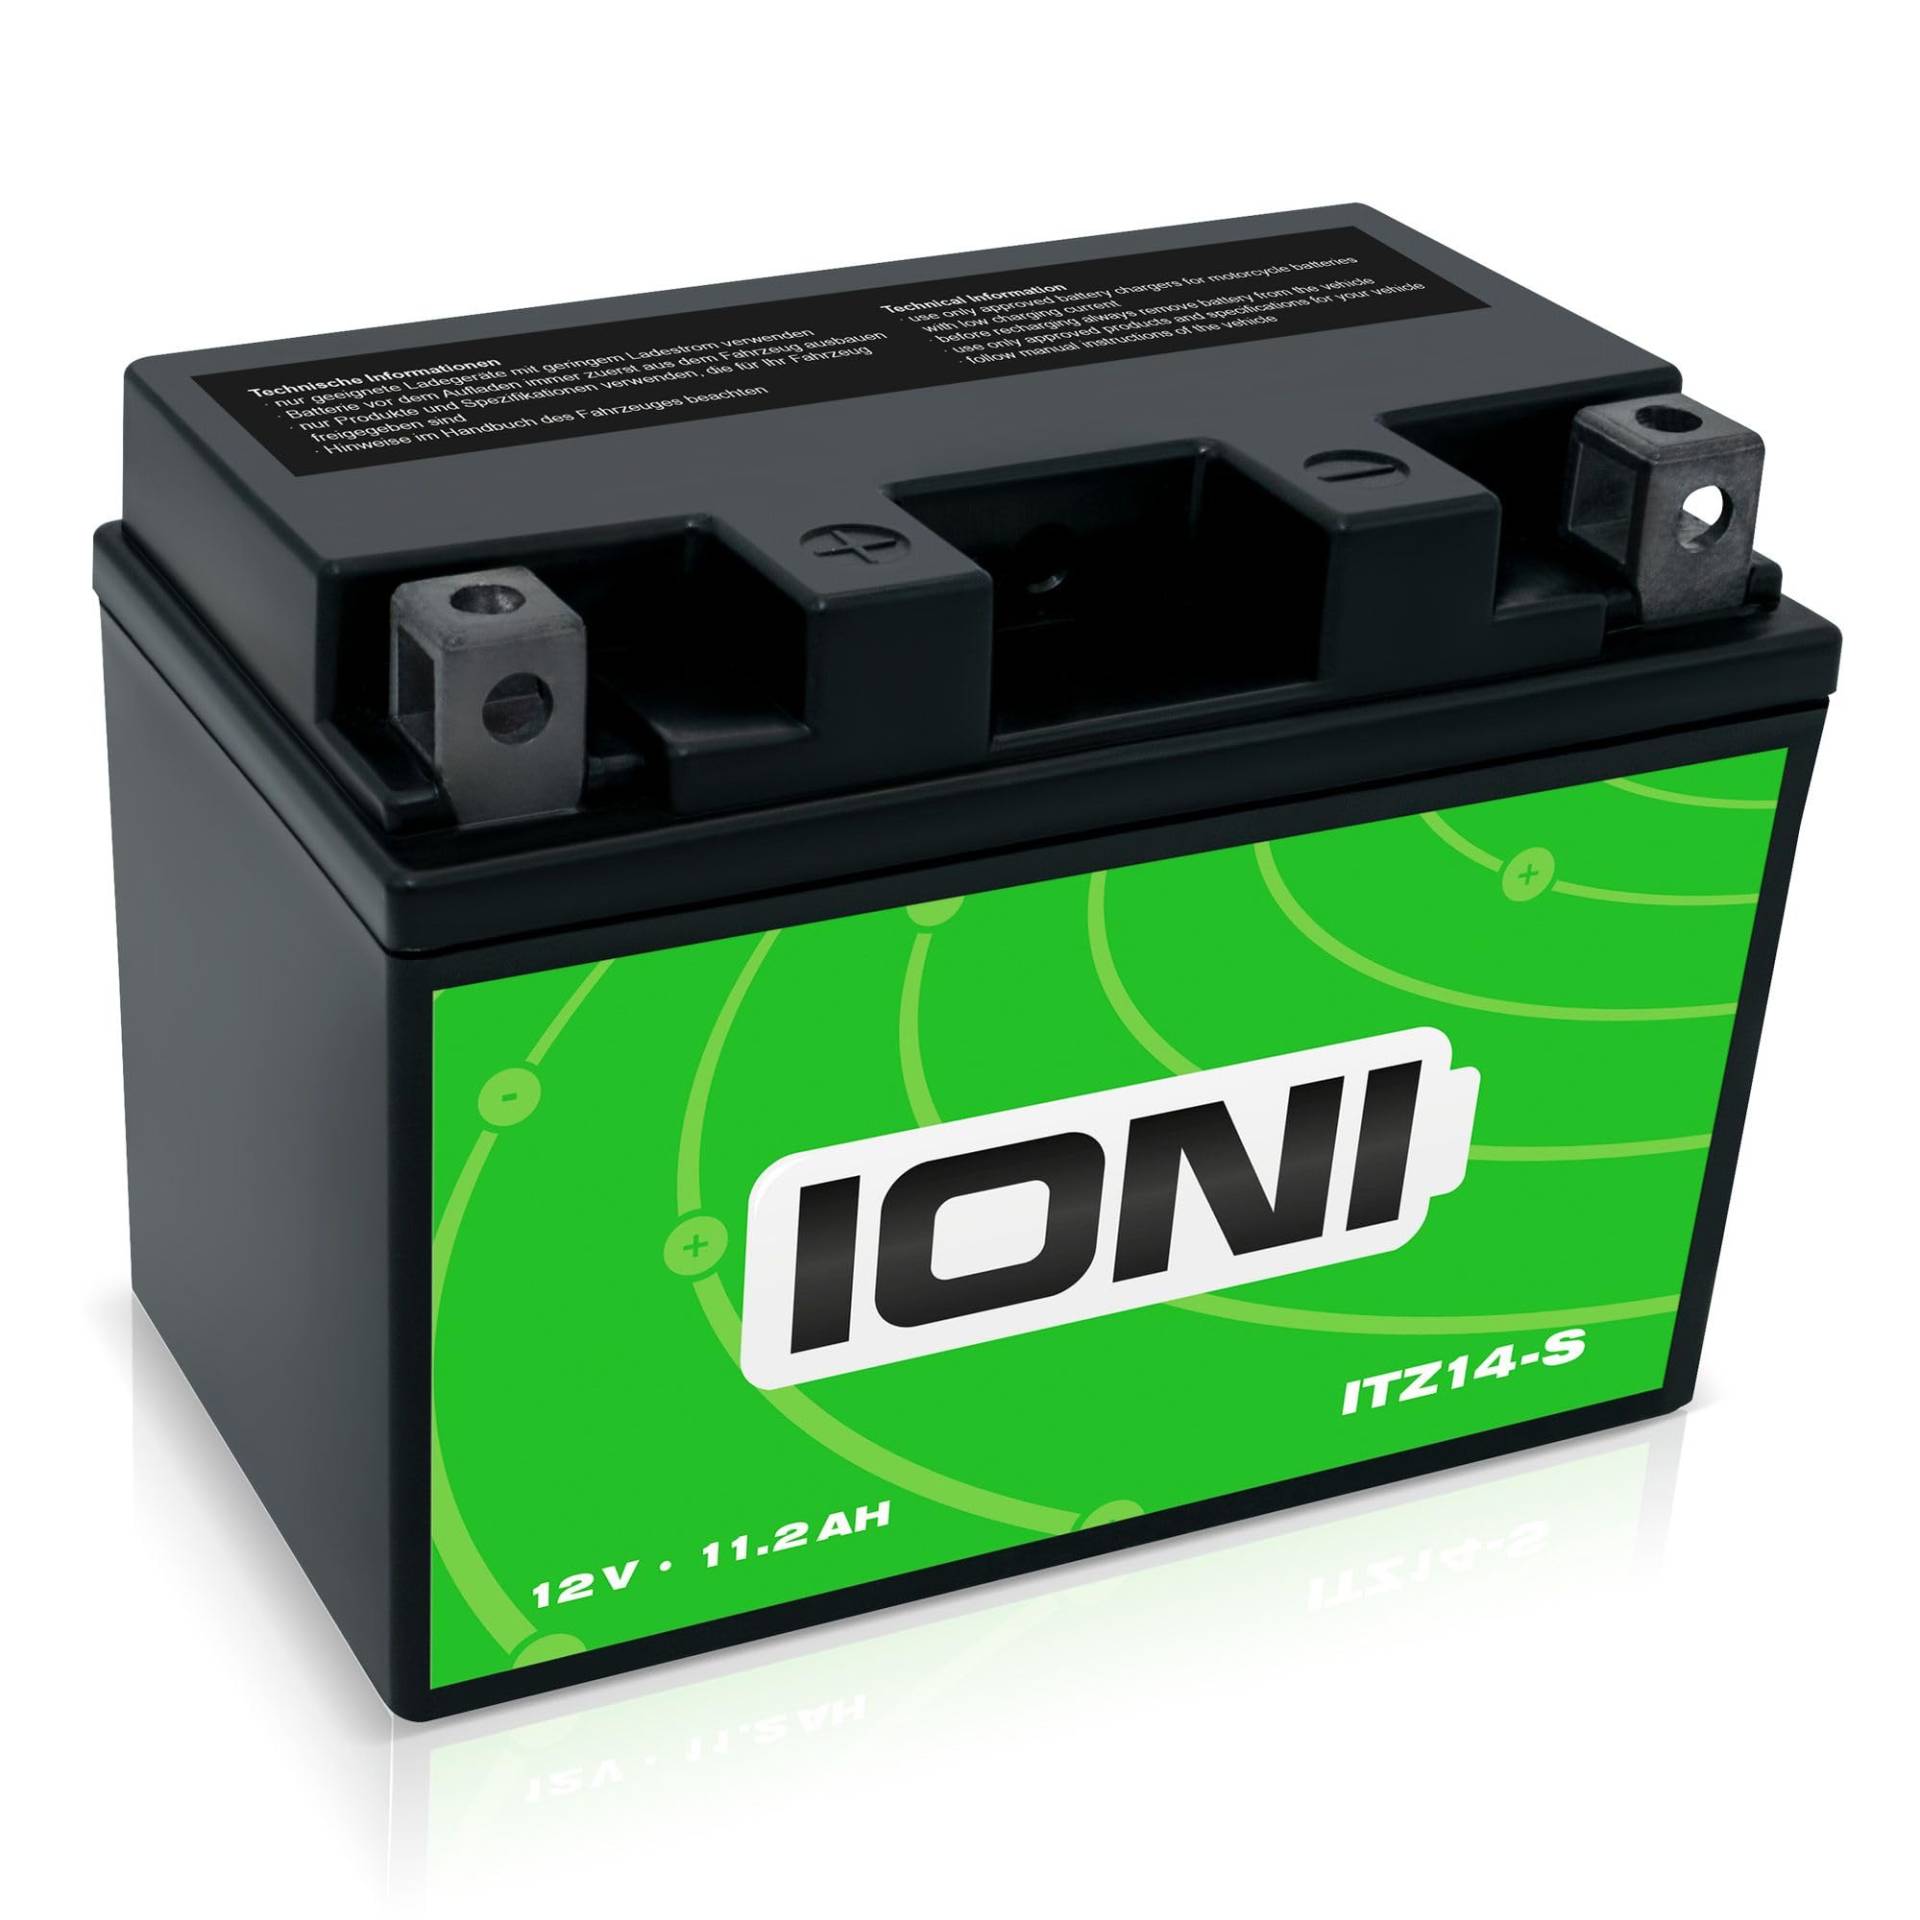 IONI ITZ14-S 12V 11,2Ah AGM Batterie kompatibel mit MG14ZS / YTZ14S versiegelt/wartungsfrei Motorradbatterie, 11,2ah - kompatibel mit ytz14s von IONI